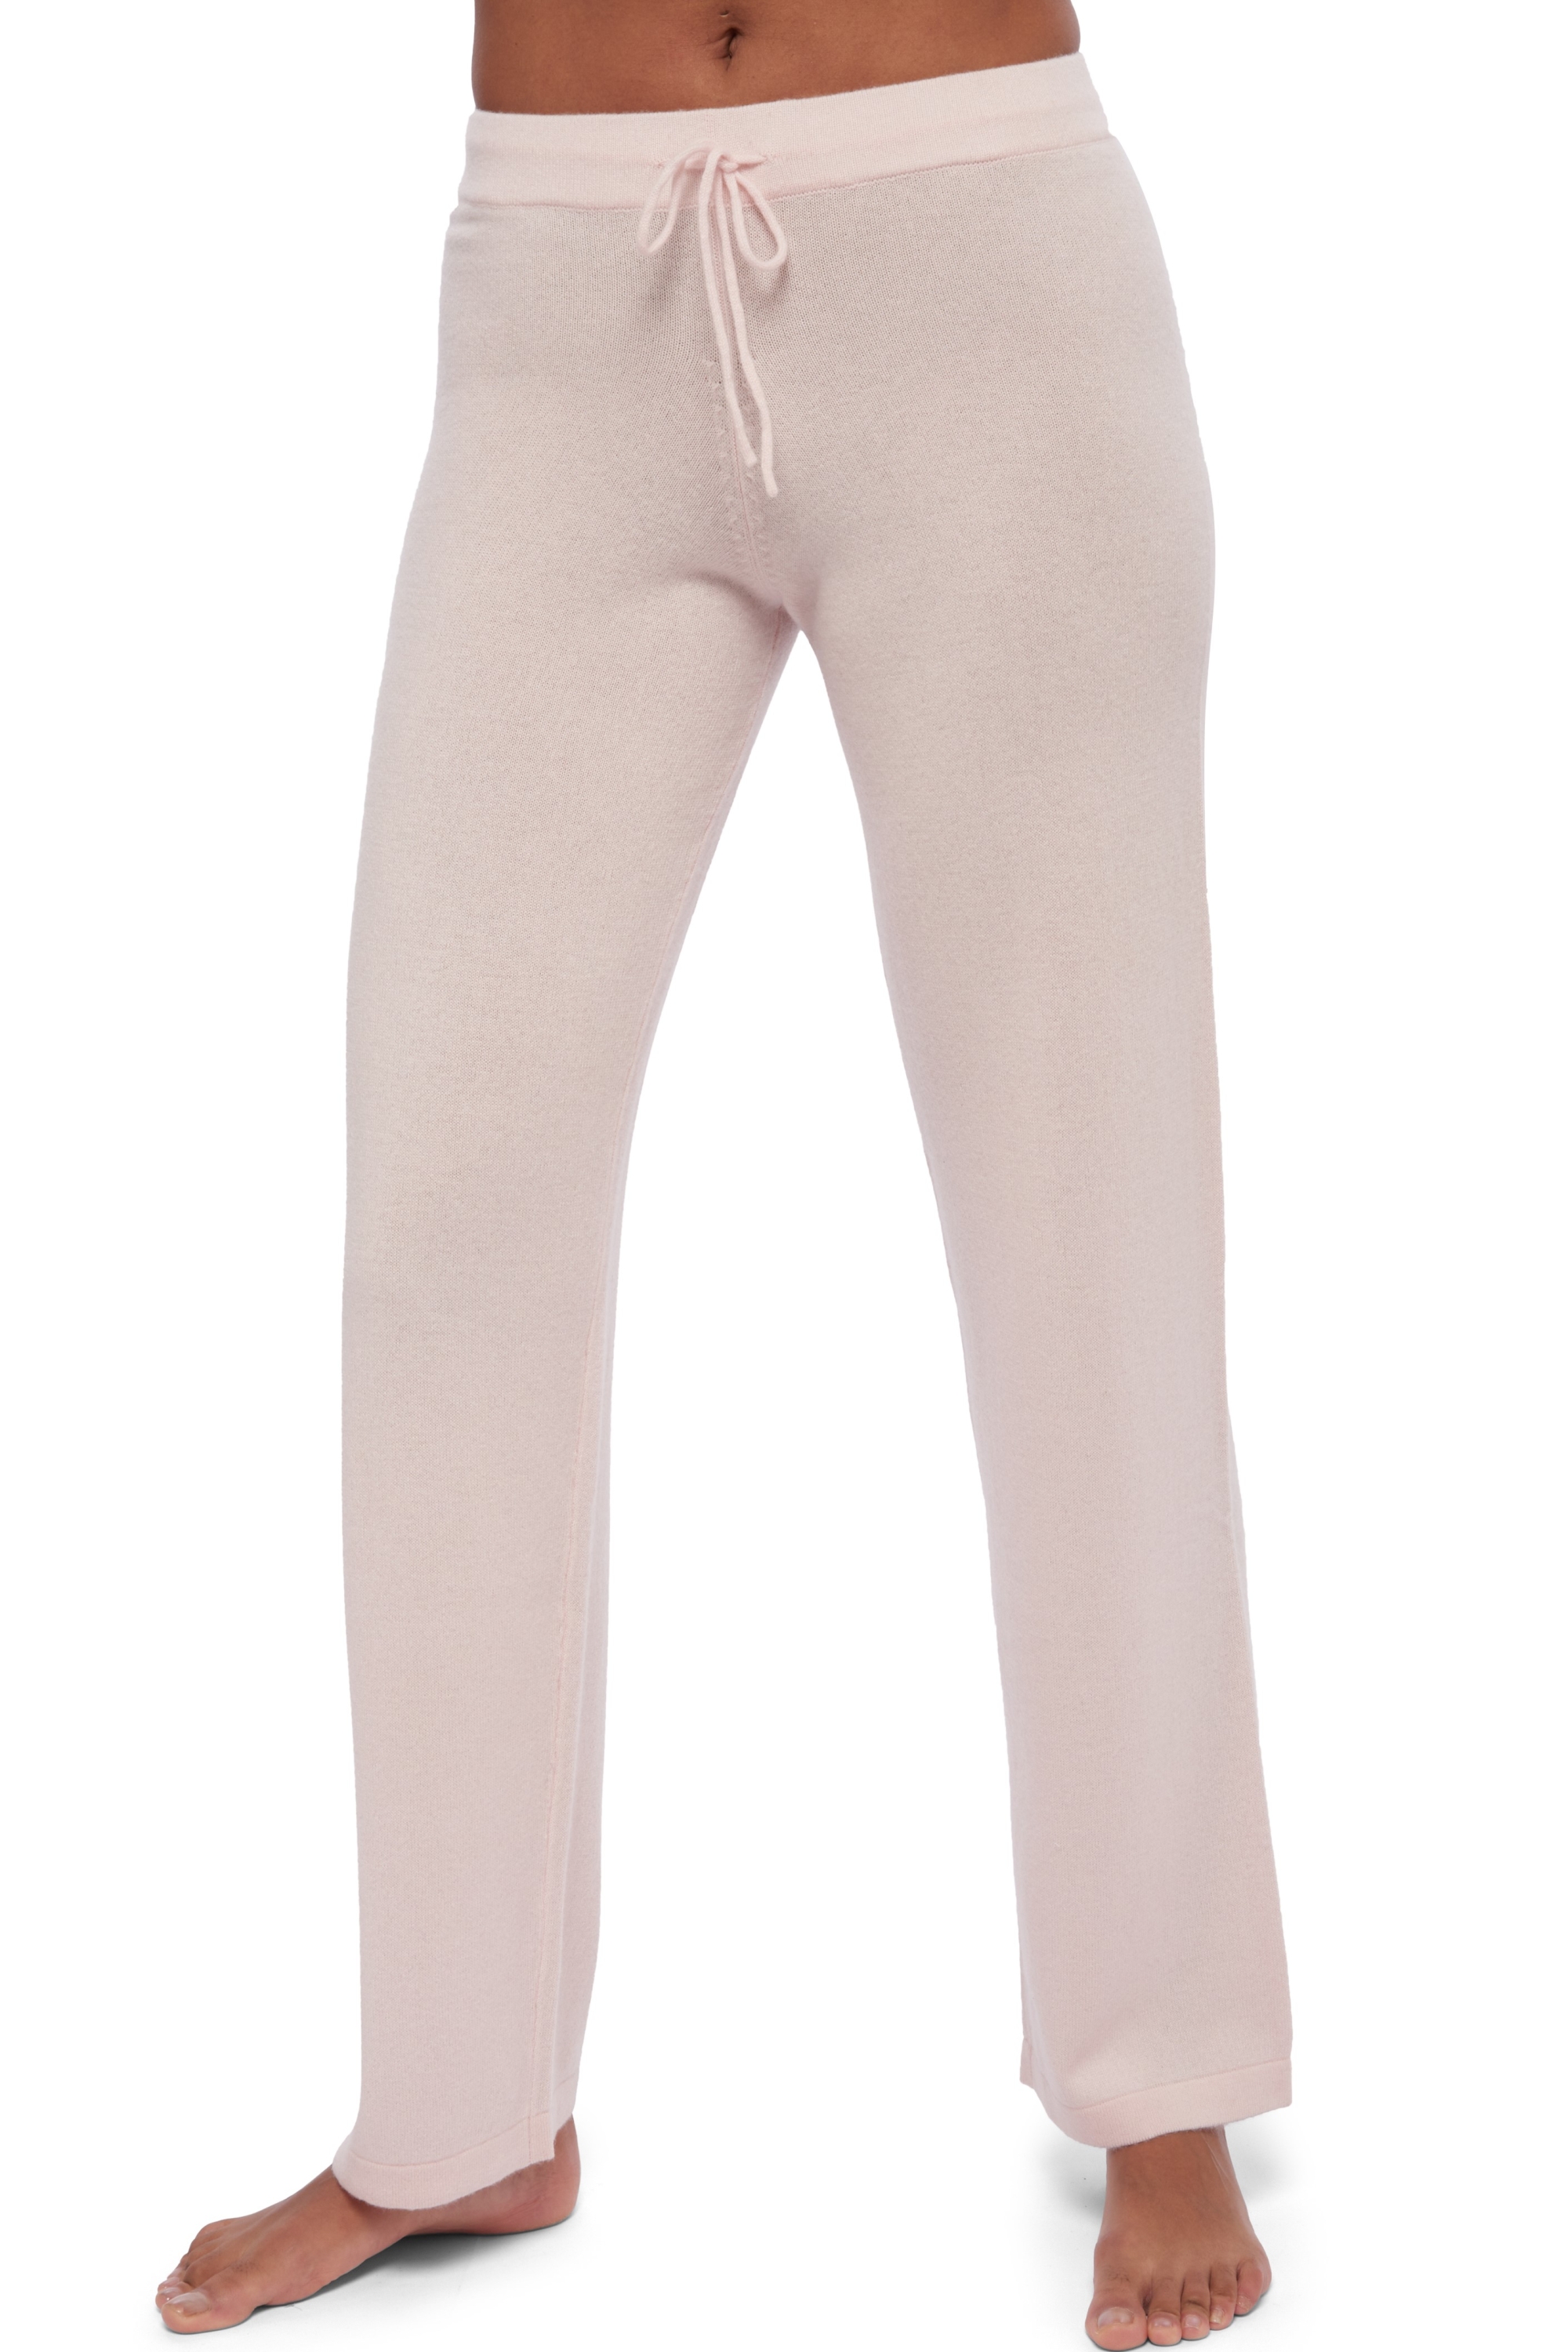 Cashmere cashmere donna pantaloni leggings malice rosa pallido xl